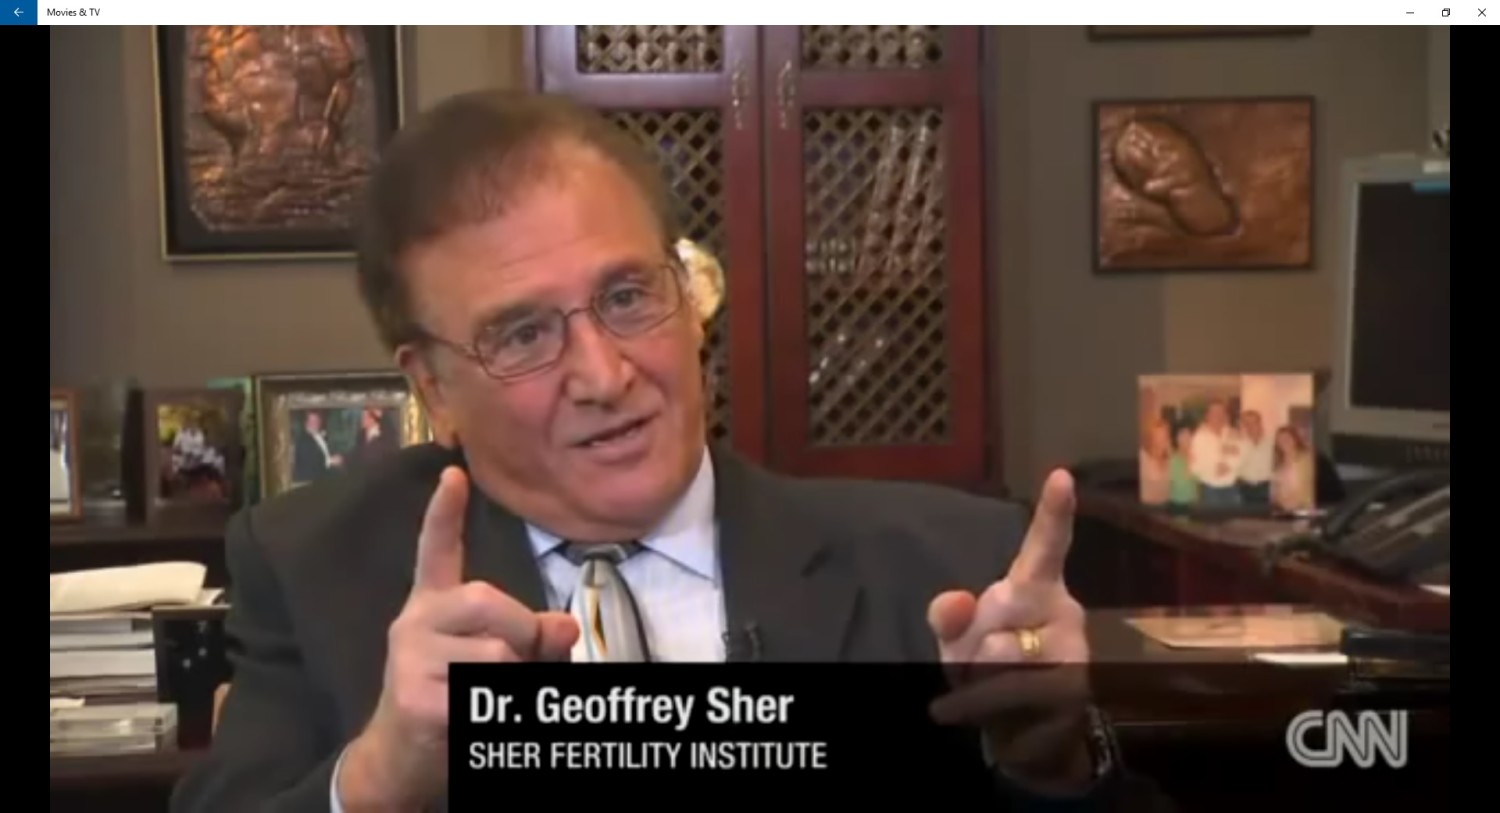 Dr. Sher on CNN